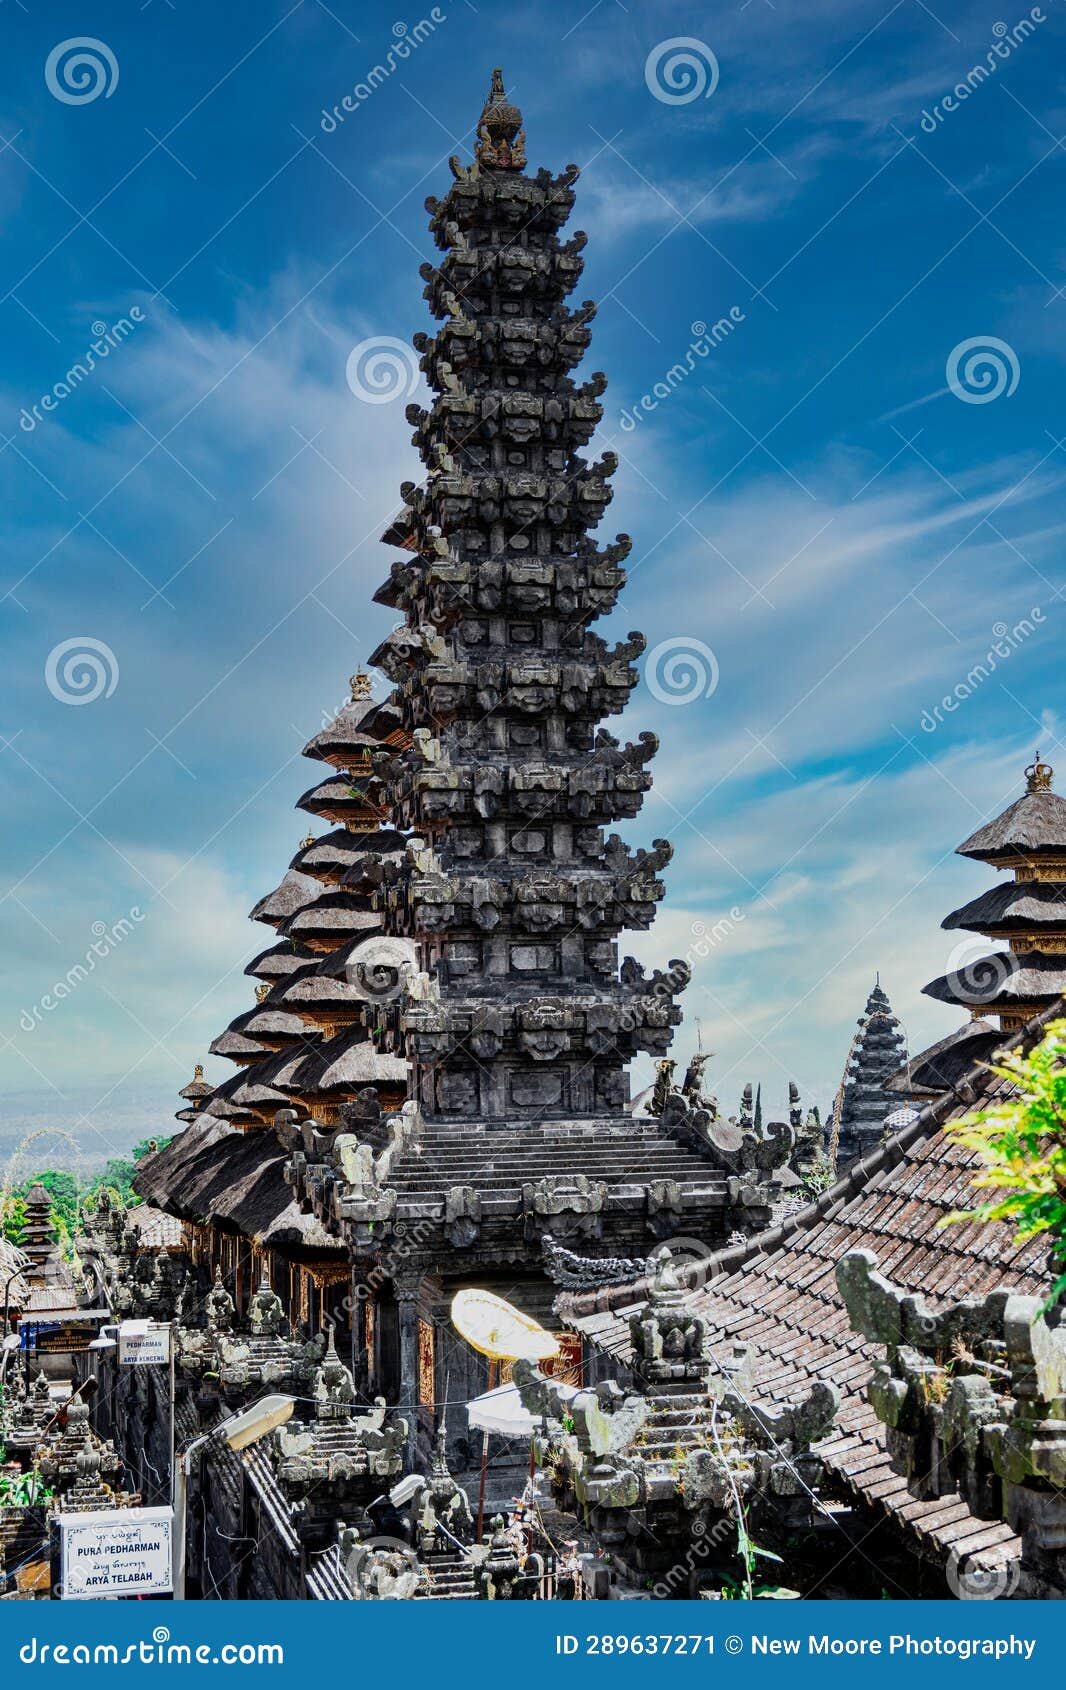 besaki temple complex candi, bali, indonesia